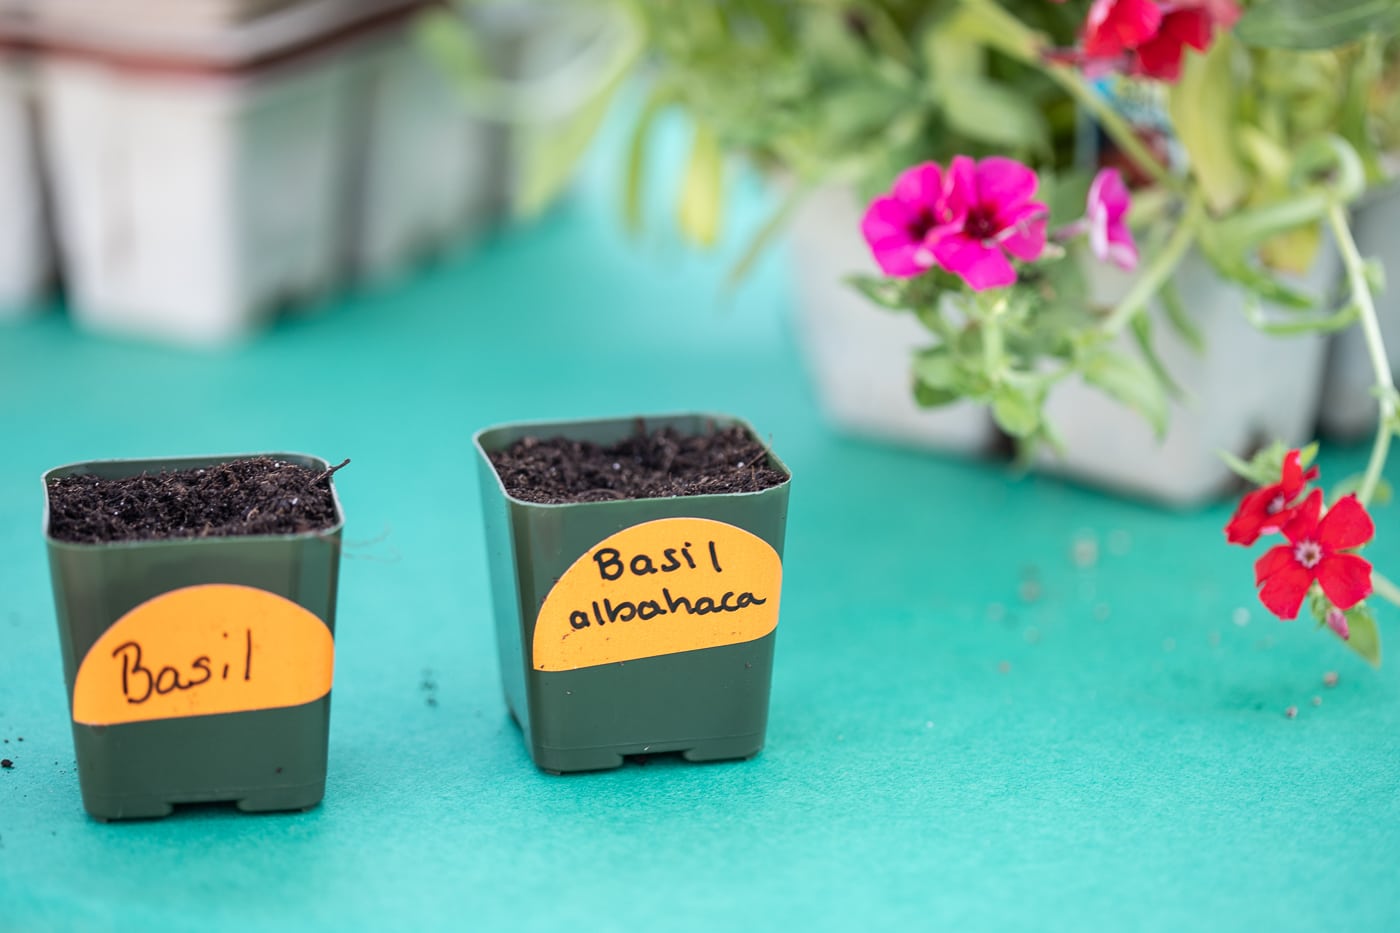 Mini pots with basil seeds